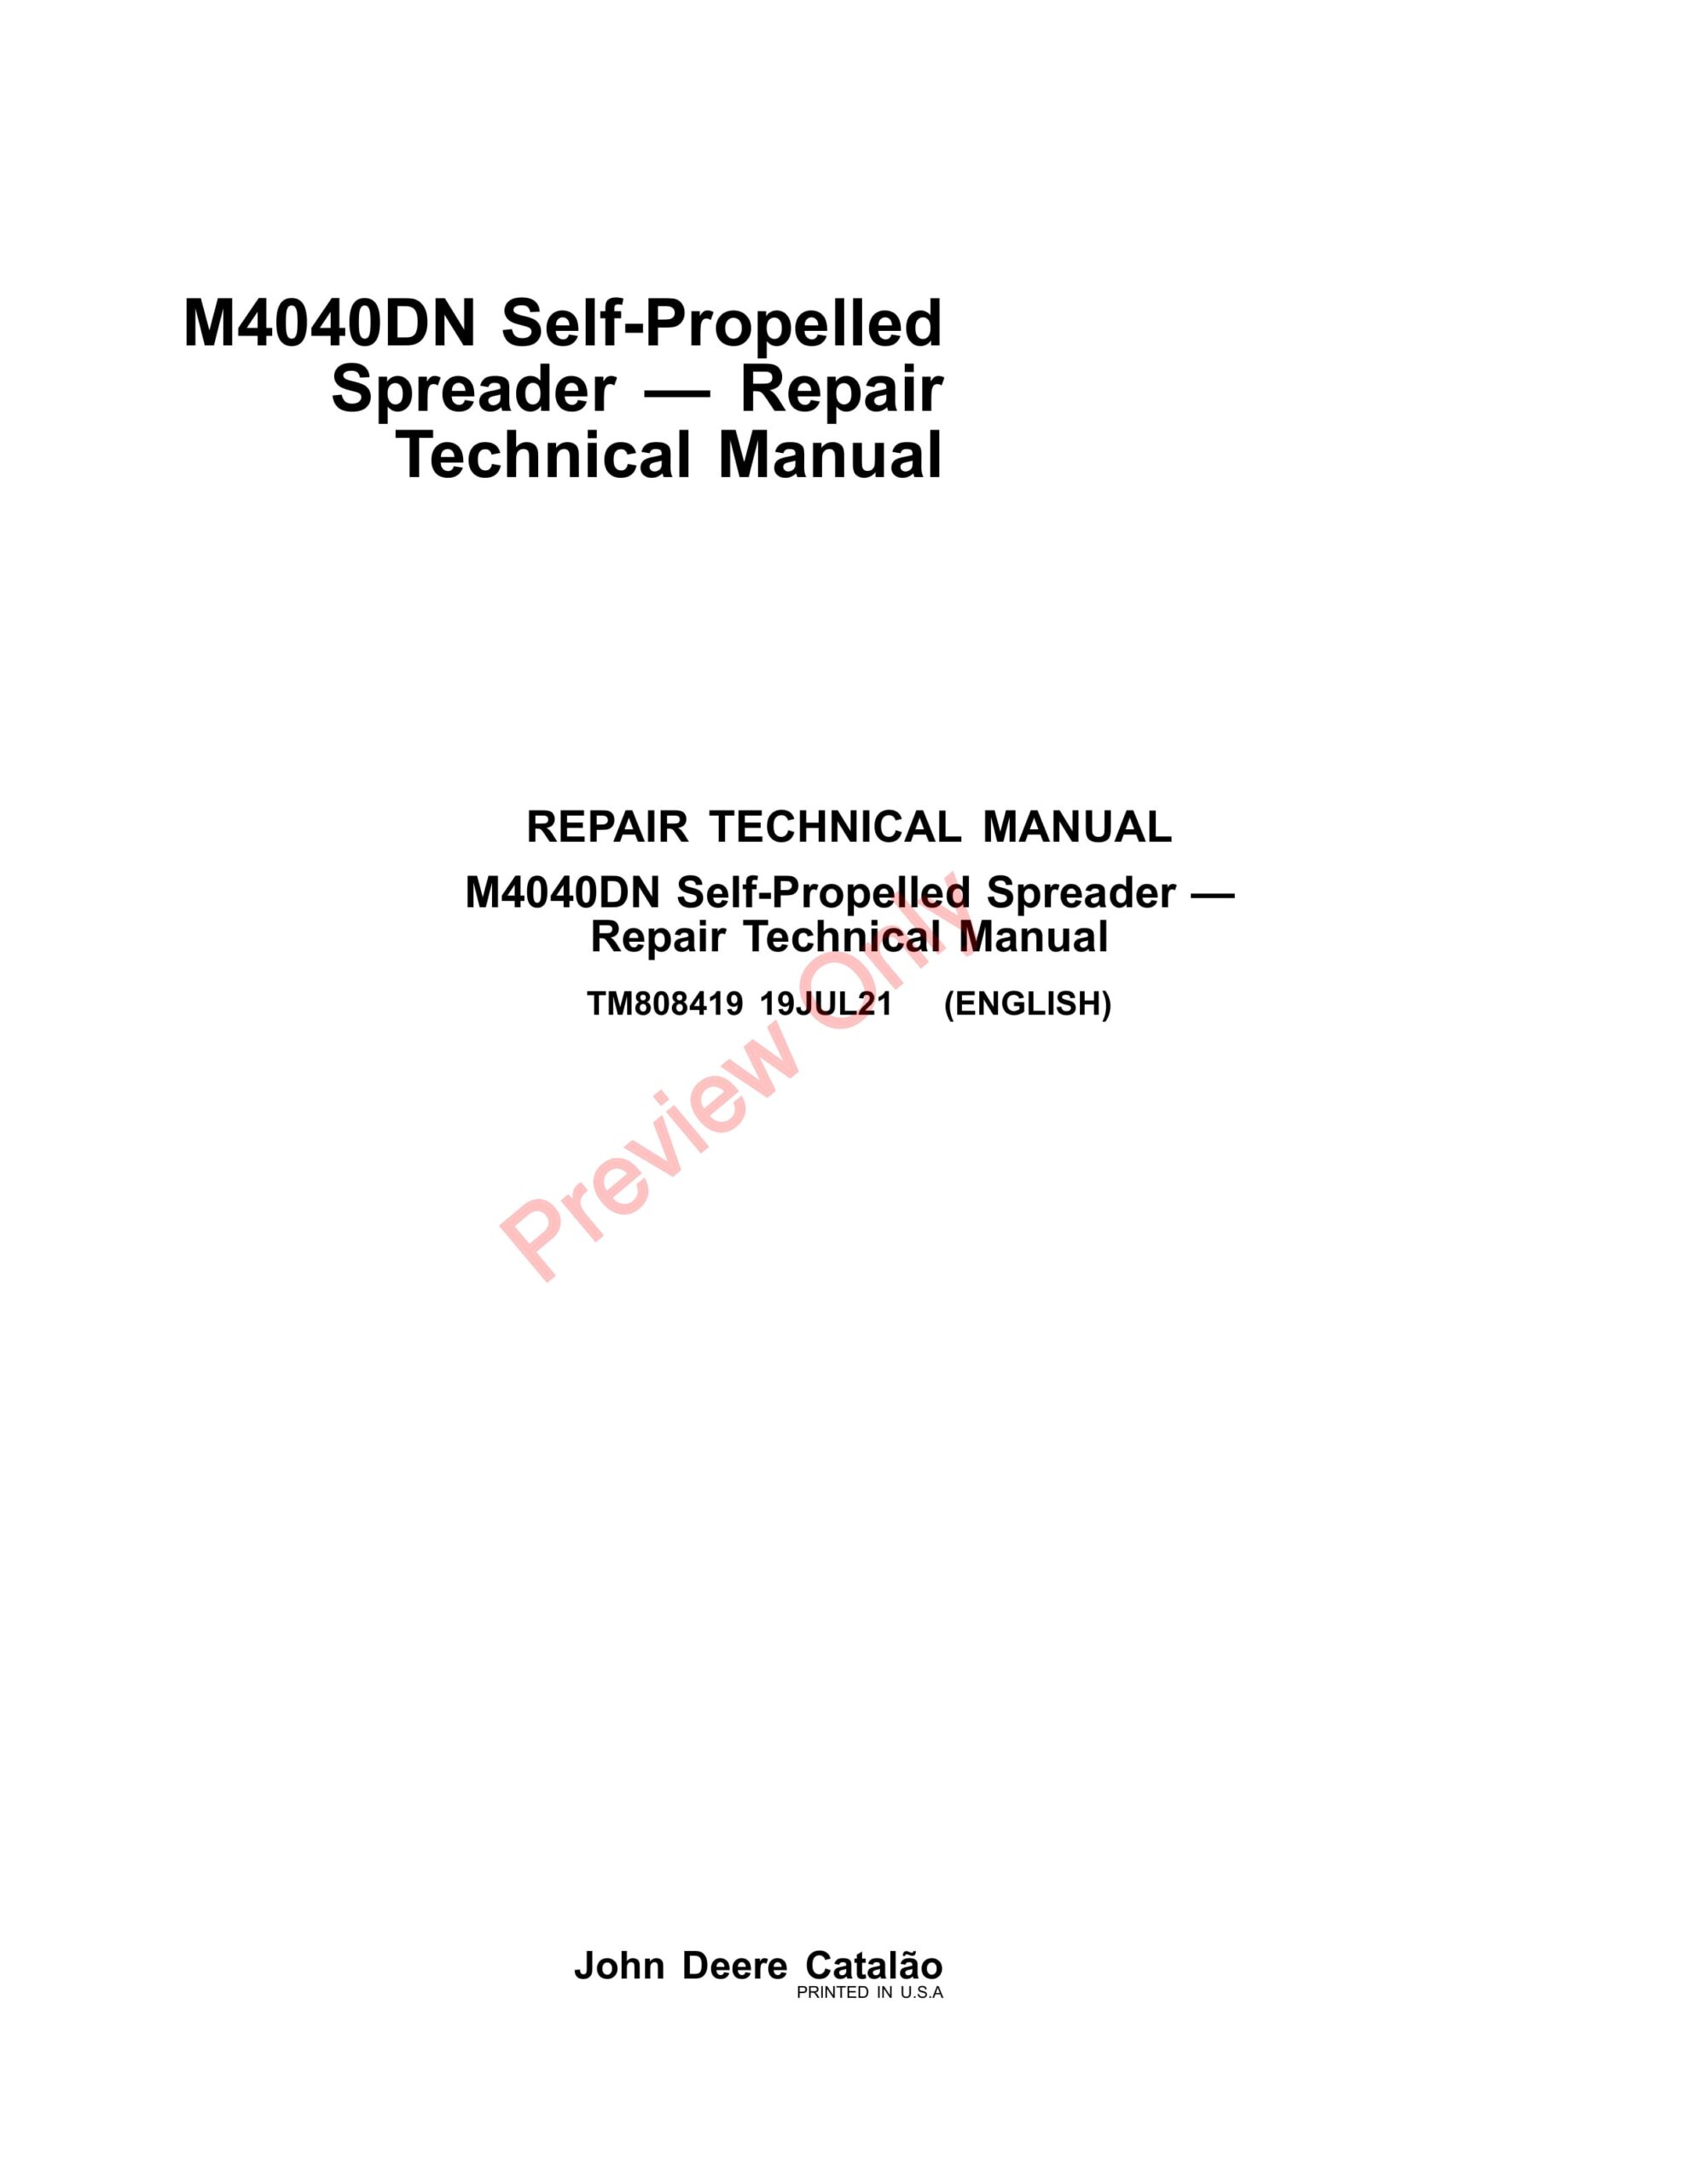 John Deere M4040DN Self-Propelled Spreader Technical Manual TM808419 19JUL21-1